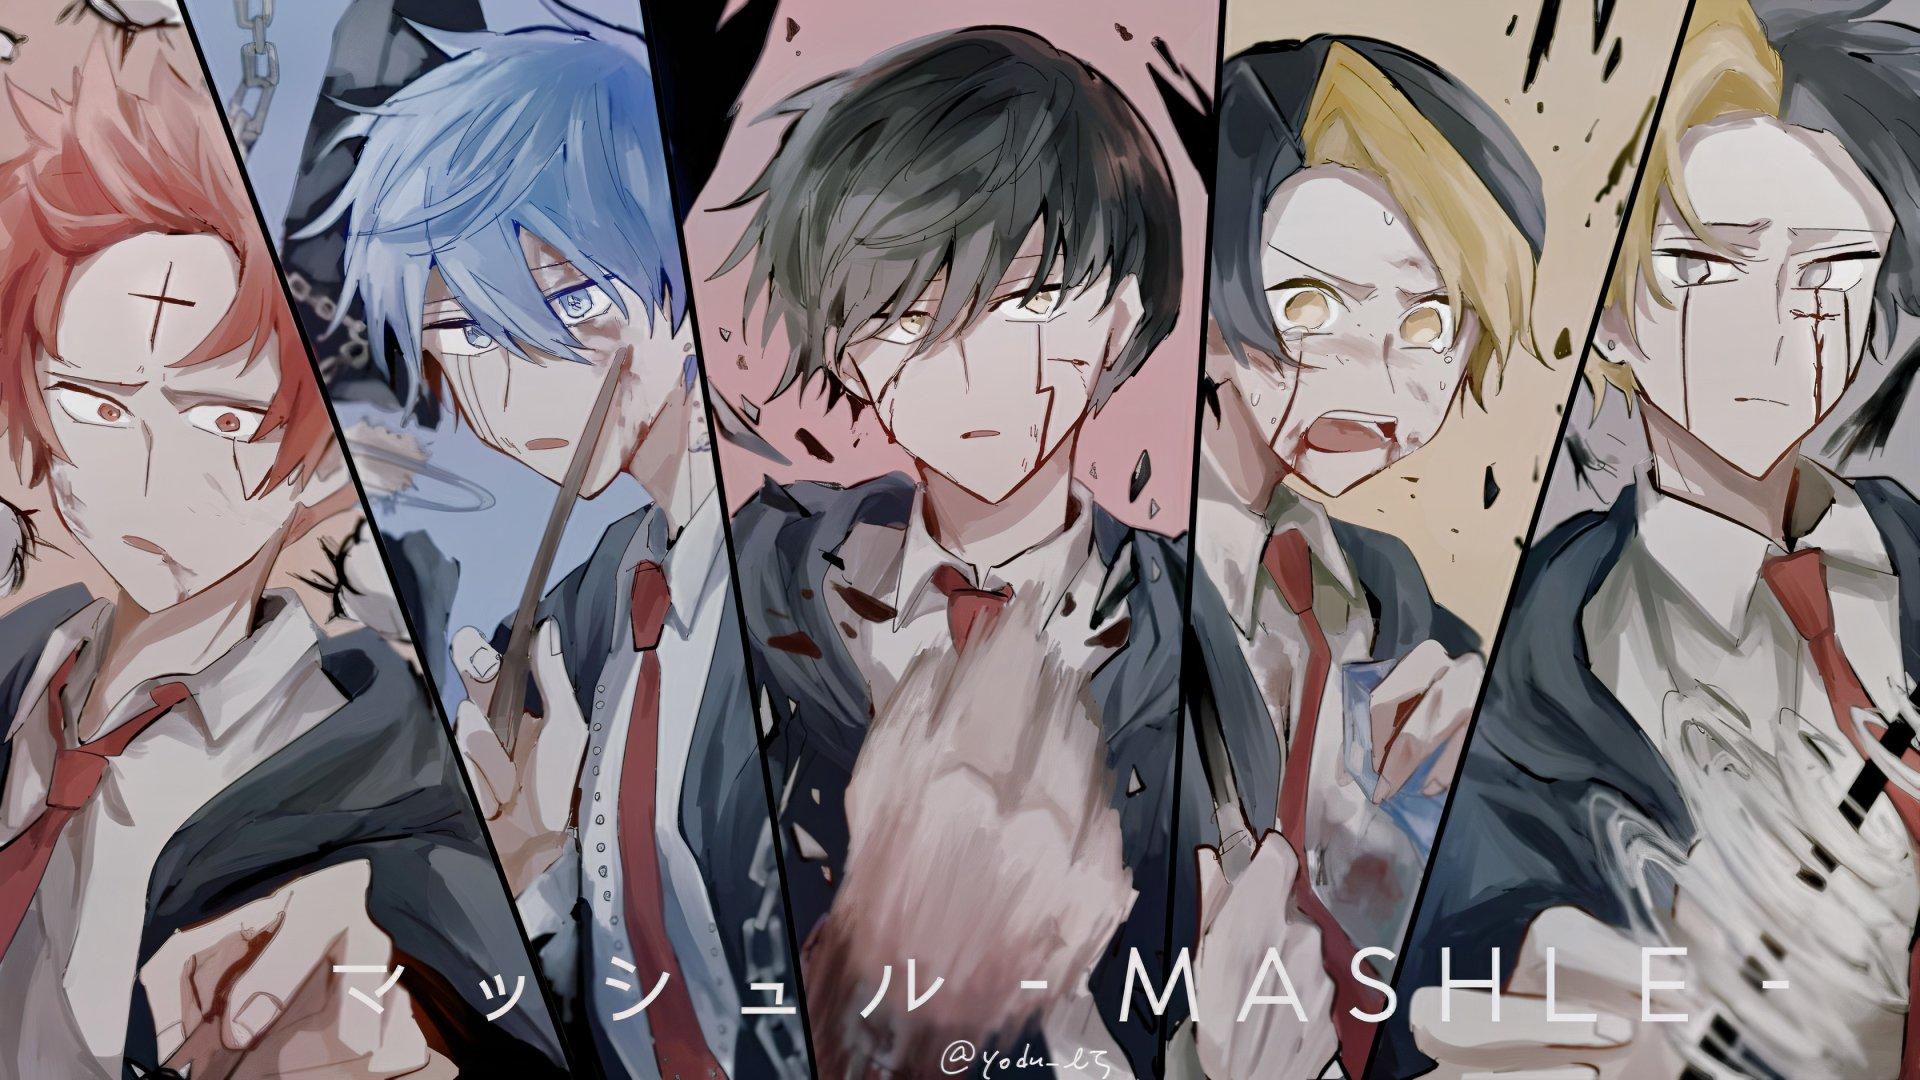 Mashu Kyrielight - Fate/Grand Order Wallpaper | Anime character names,  Waifu material, Anime